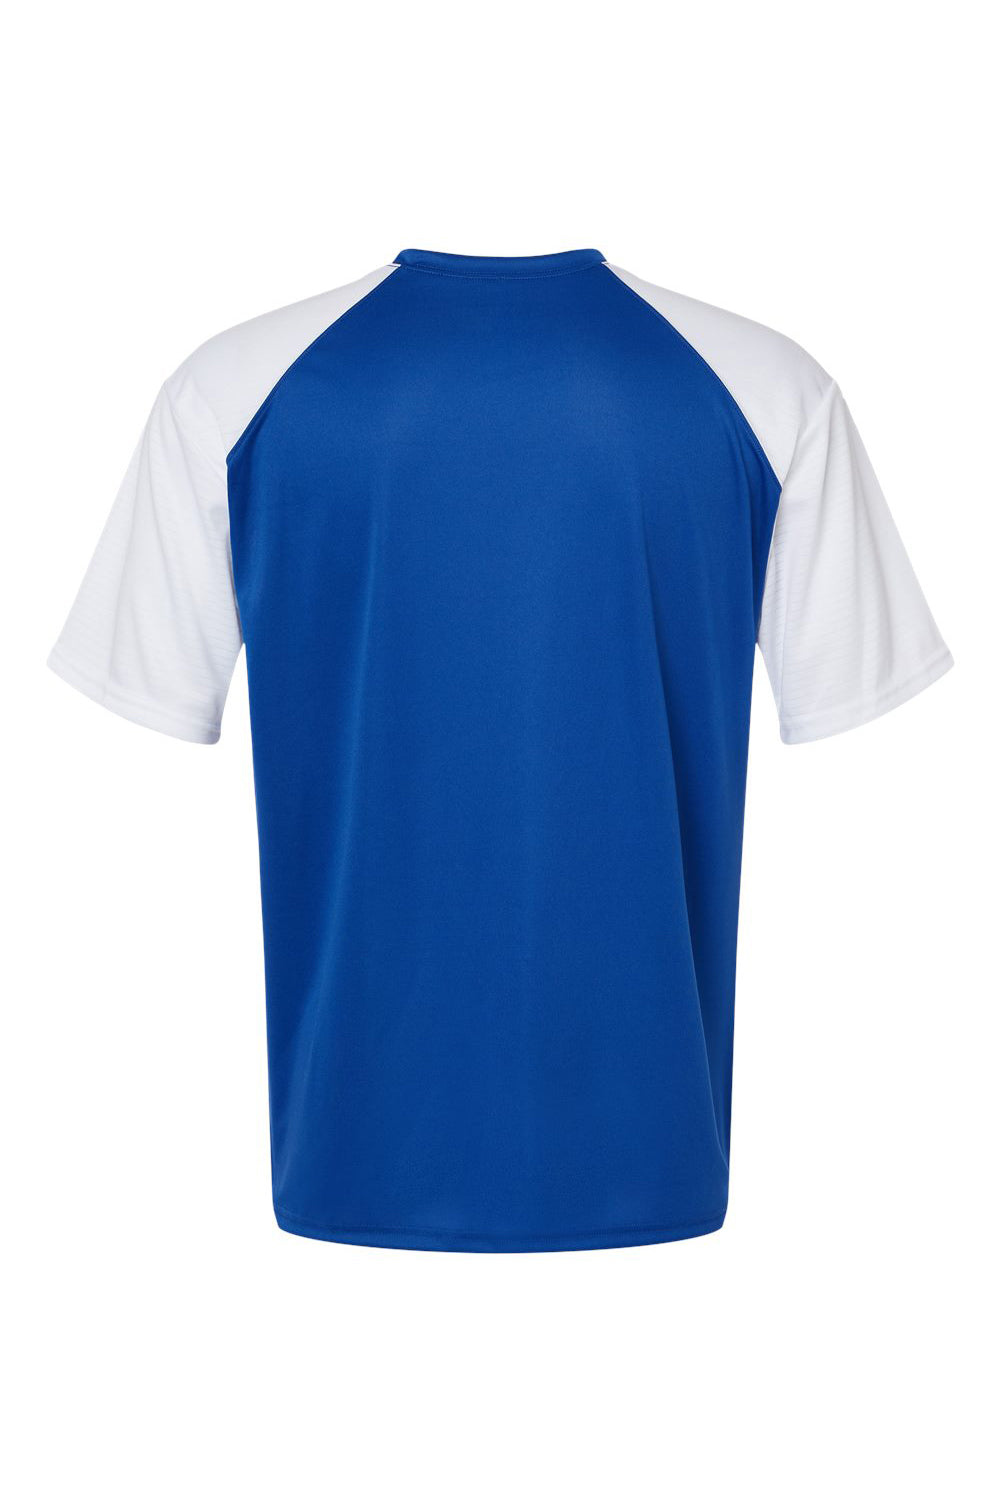 Badger 4230 Mens Breakout Moisture Wicking Short Sleeve Crewneck T-Shirt Royal Blue/White Flat Back